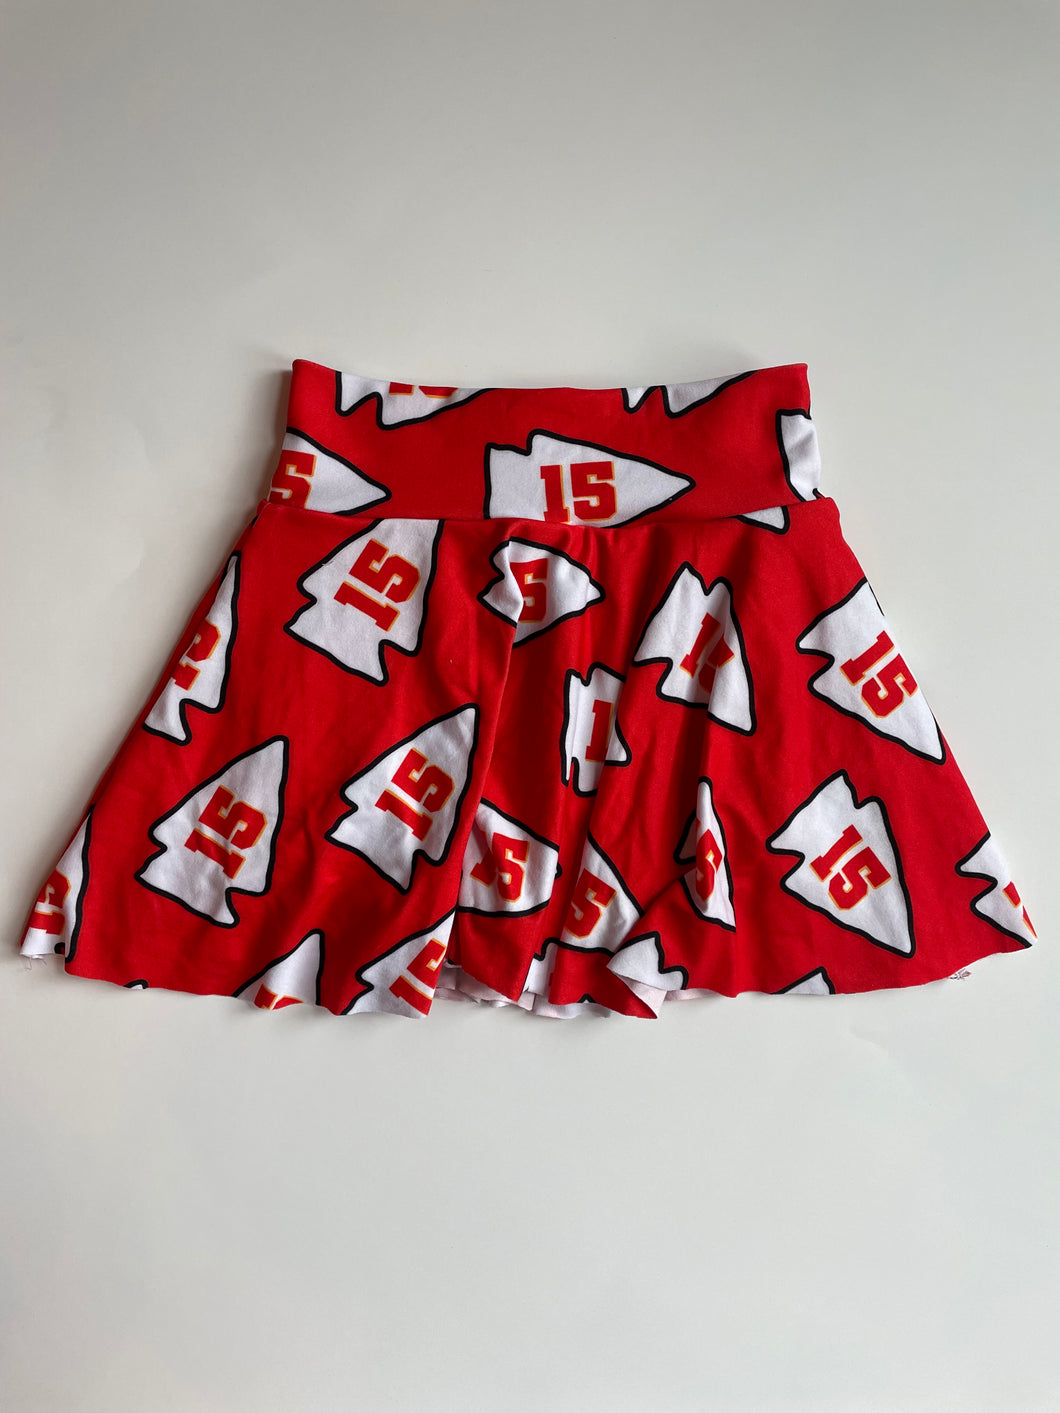 Cheer Skirt: 15 Red